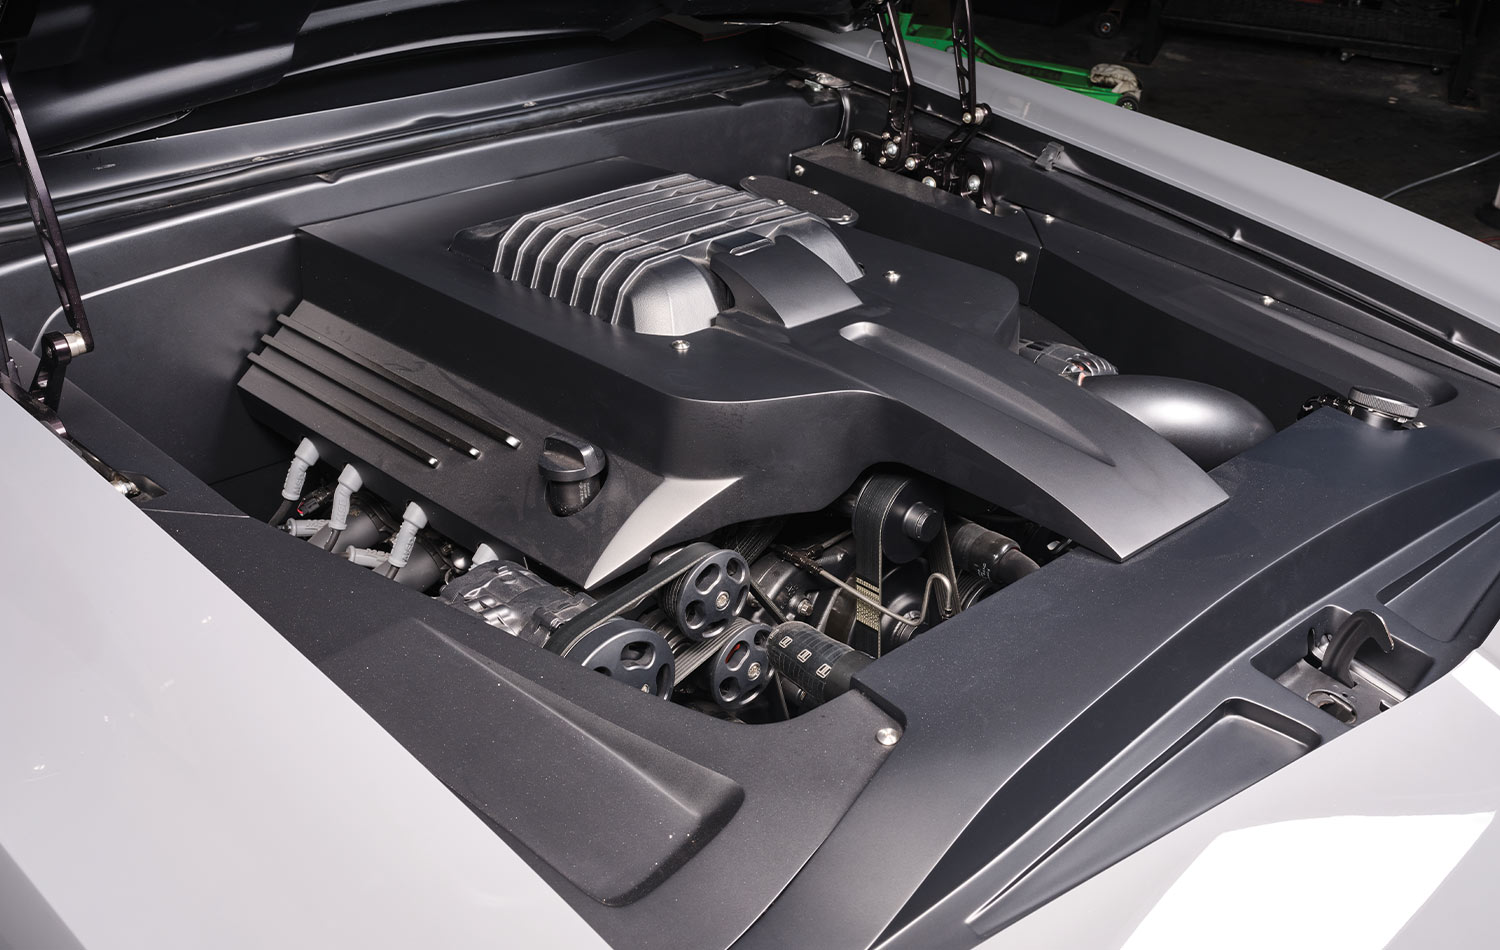 three quarter view of the '69 Camaro engine